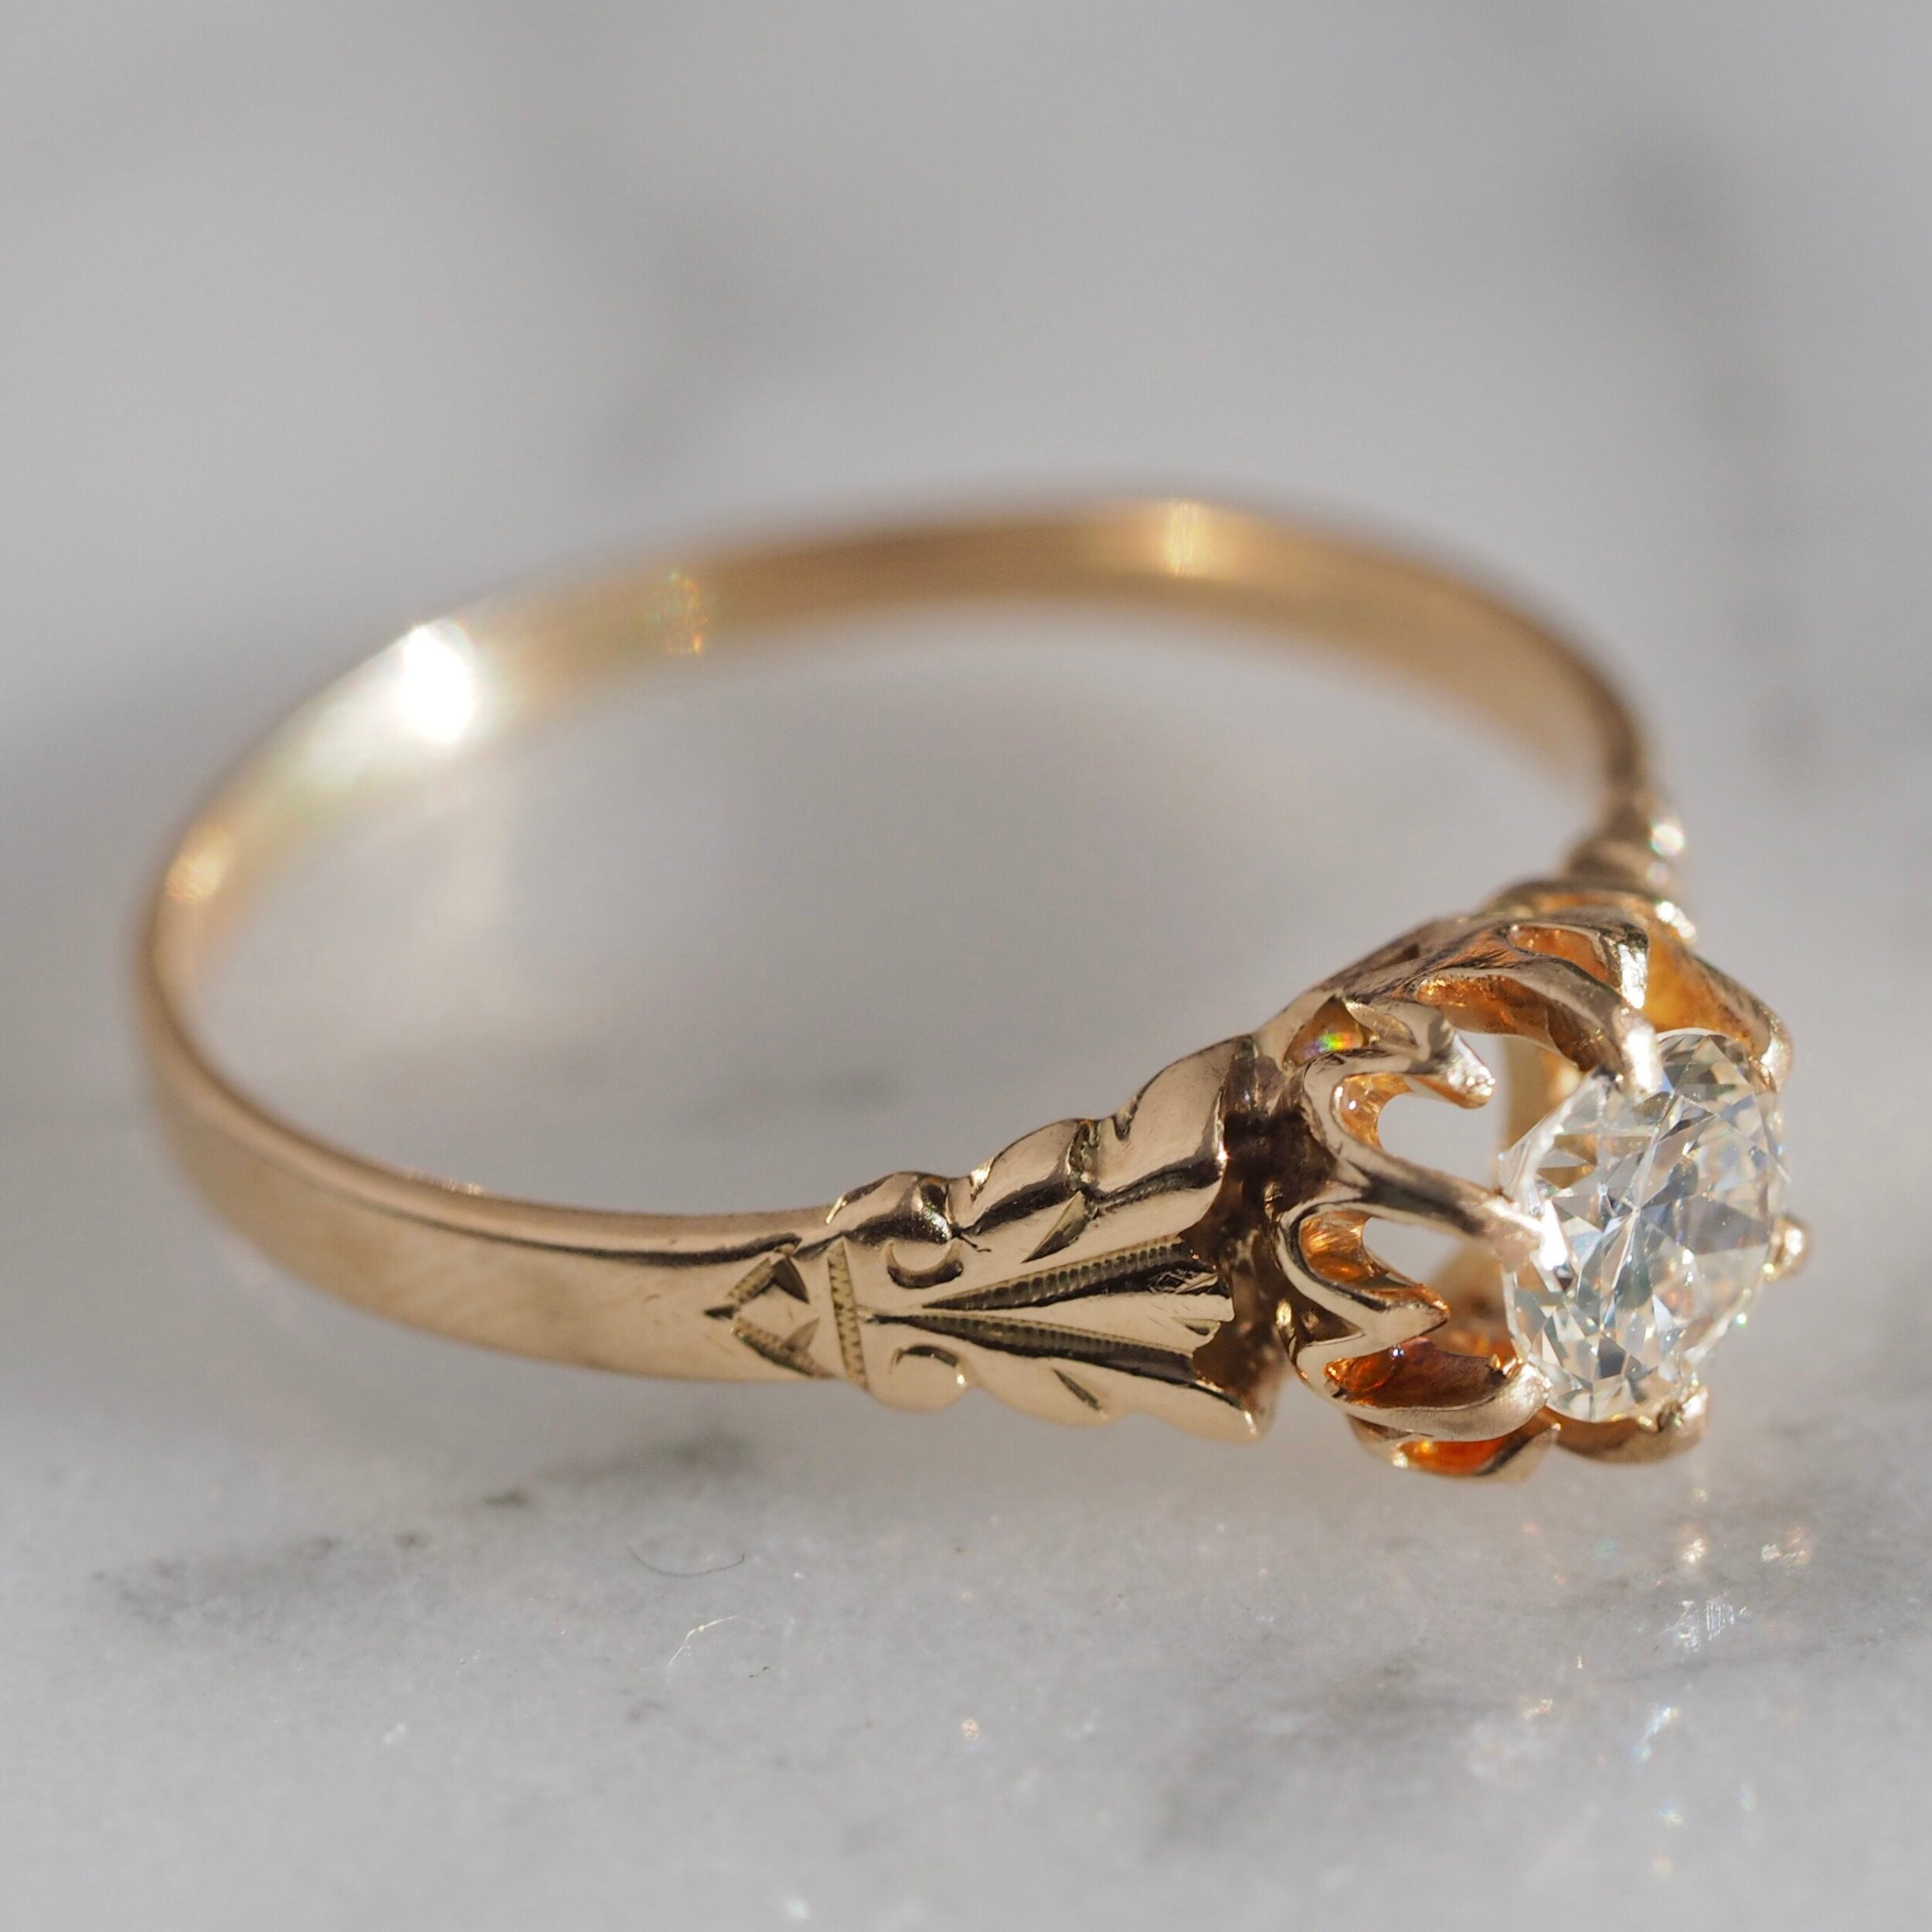 Antique 14k Gold Old European Cut Diamond Engagement Ring